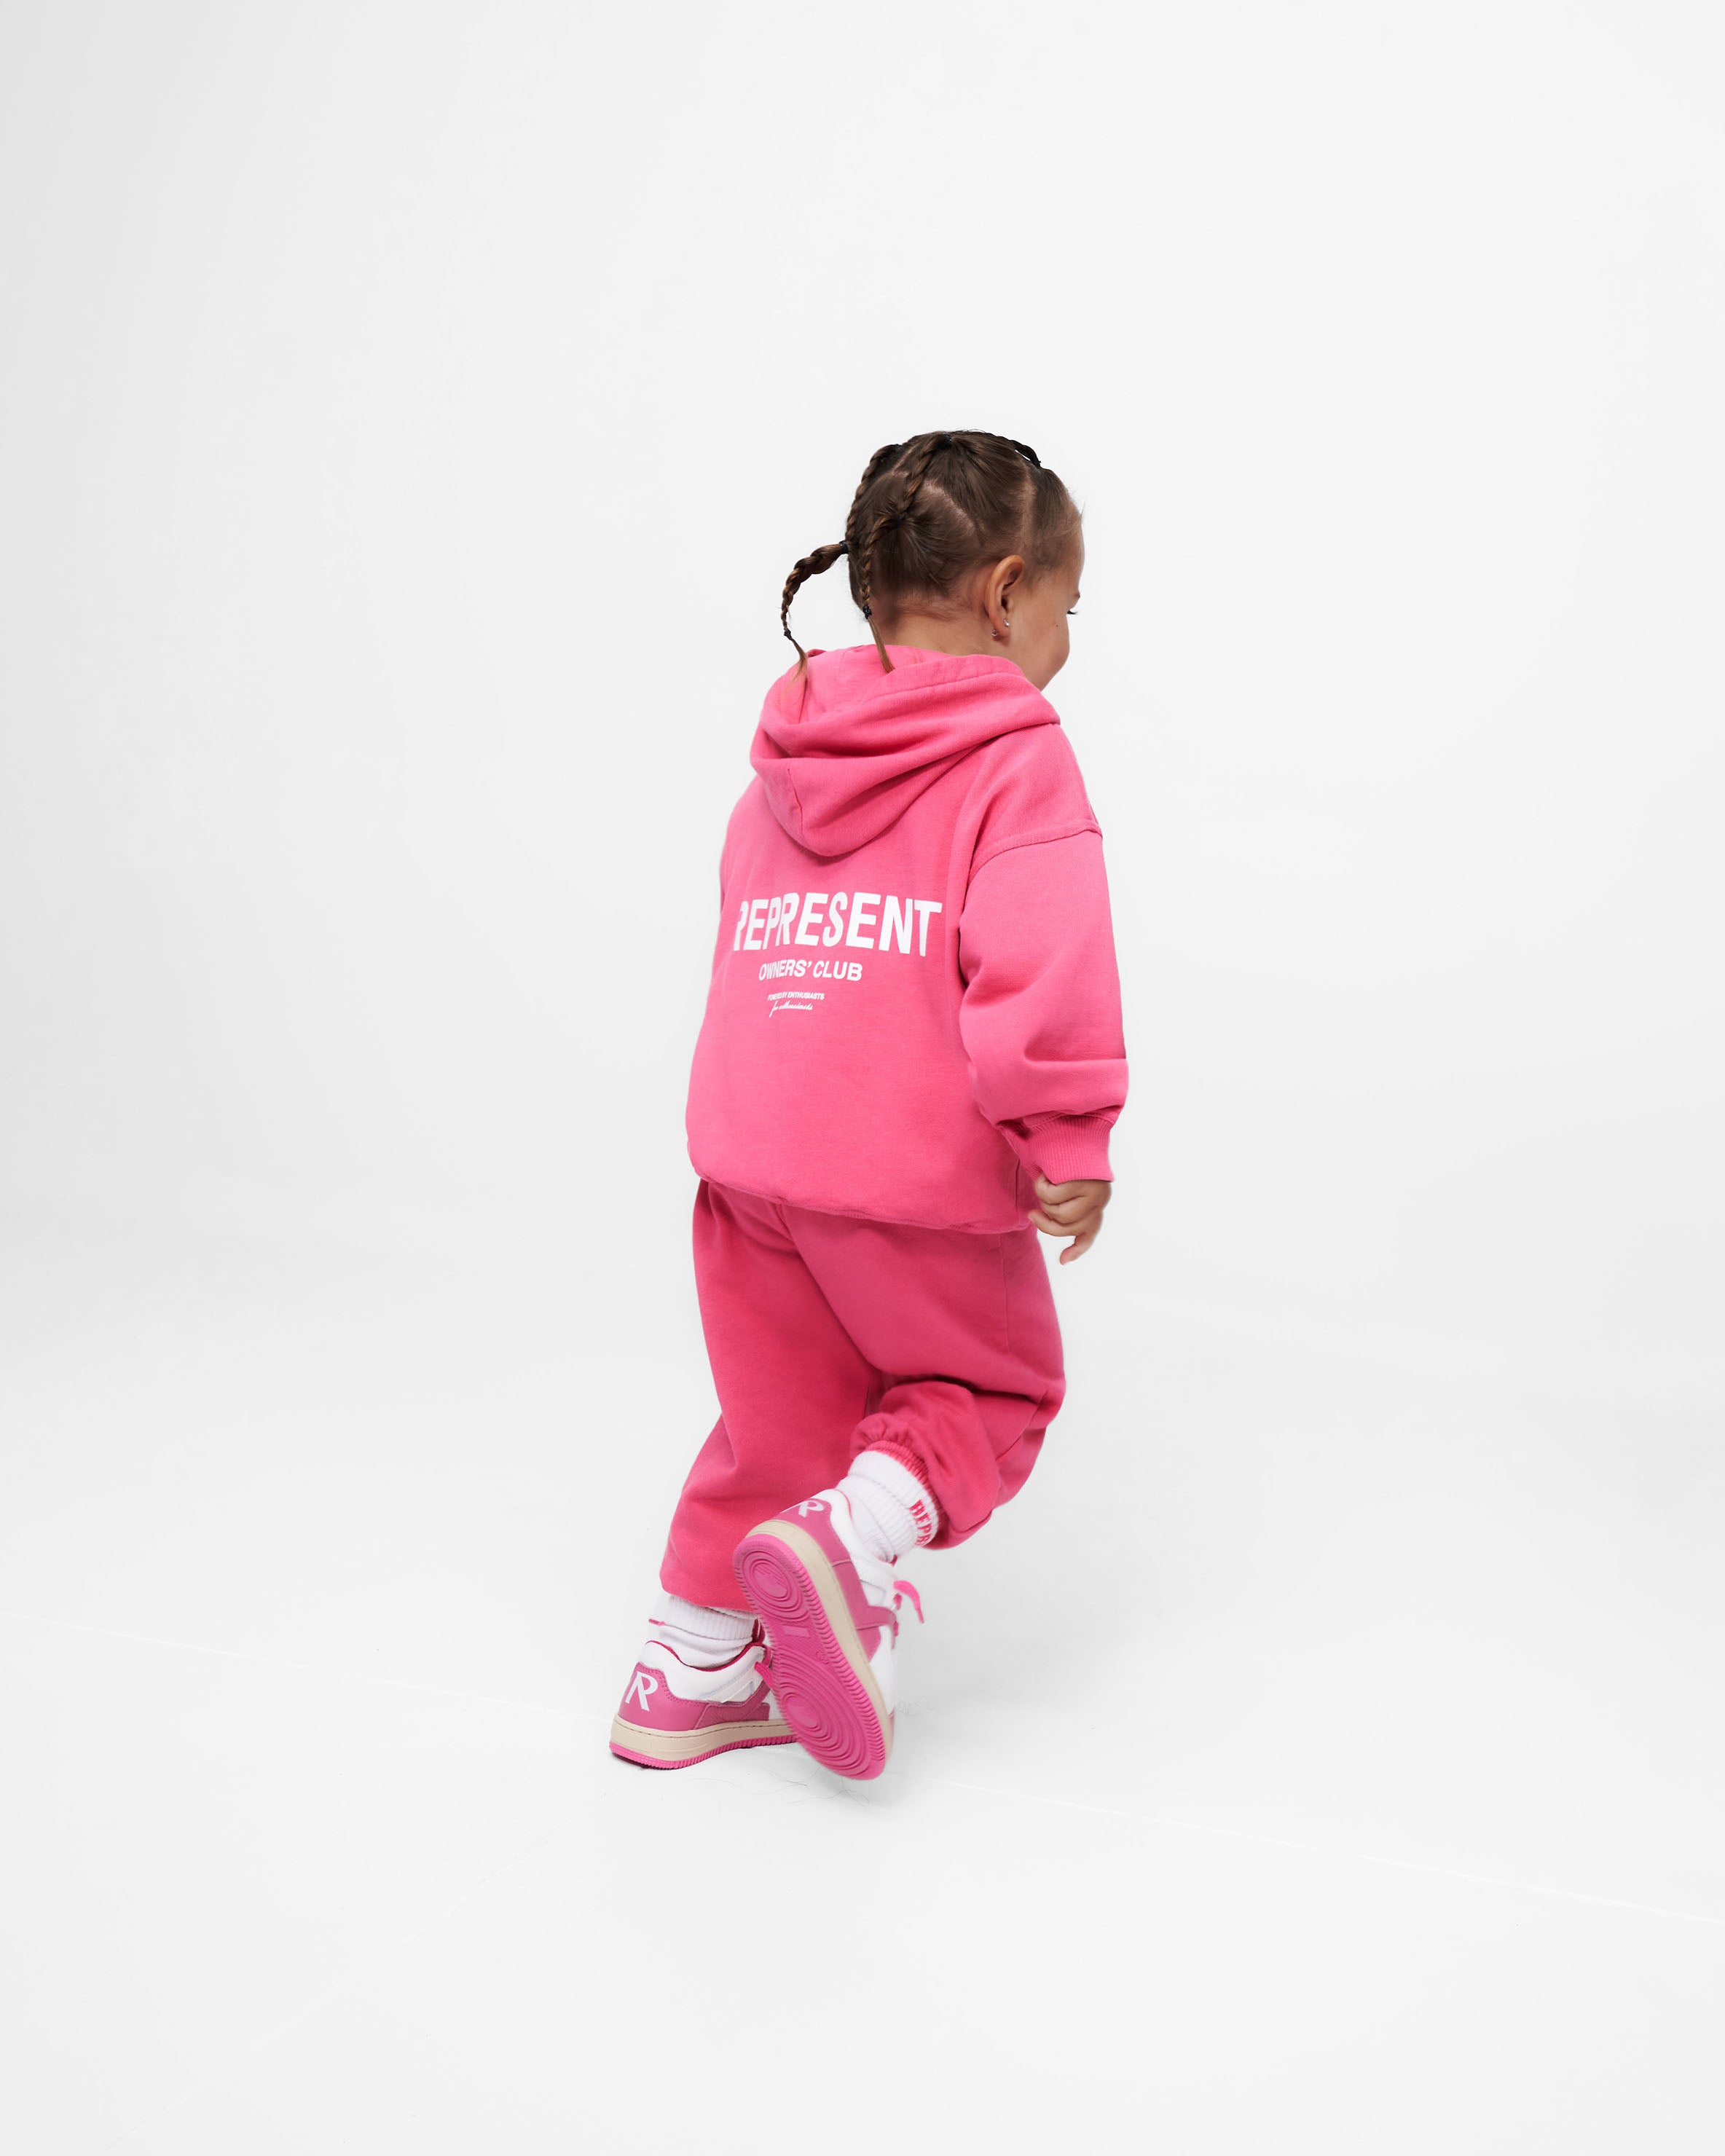 Represent Mini Owners Club Sweatpants - Bubblegum Pink